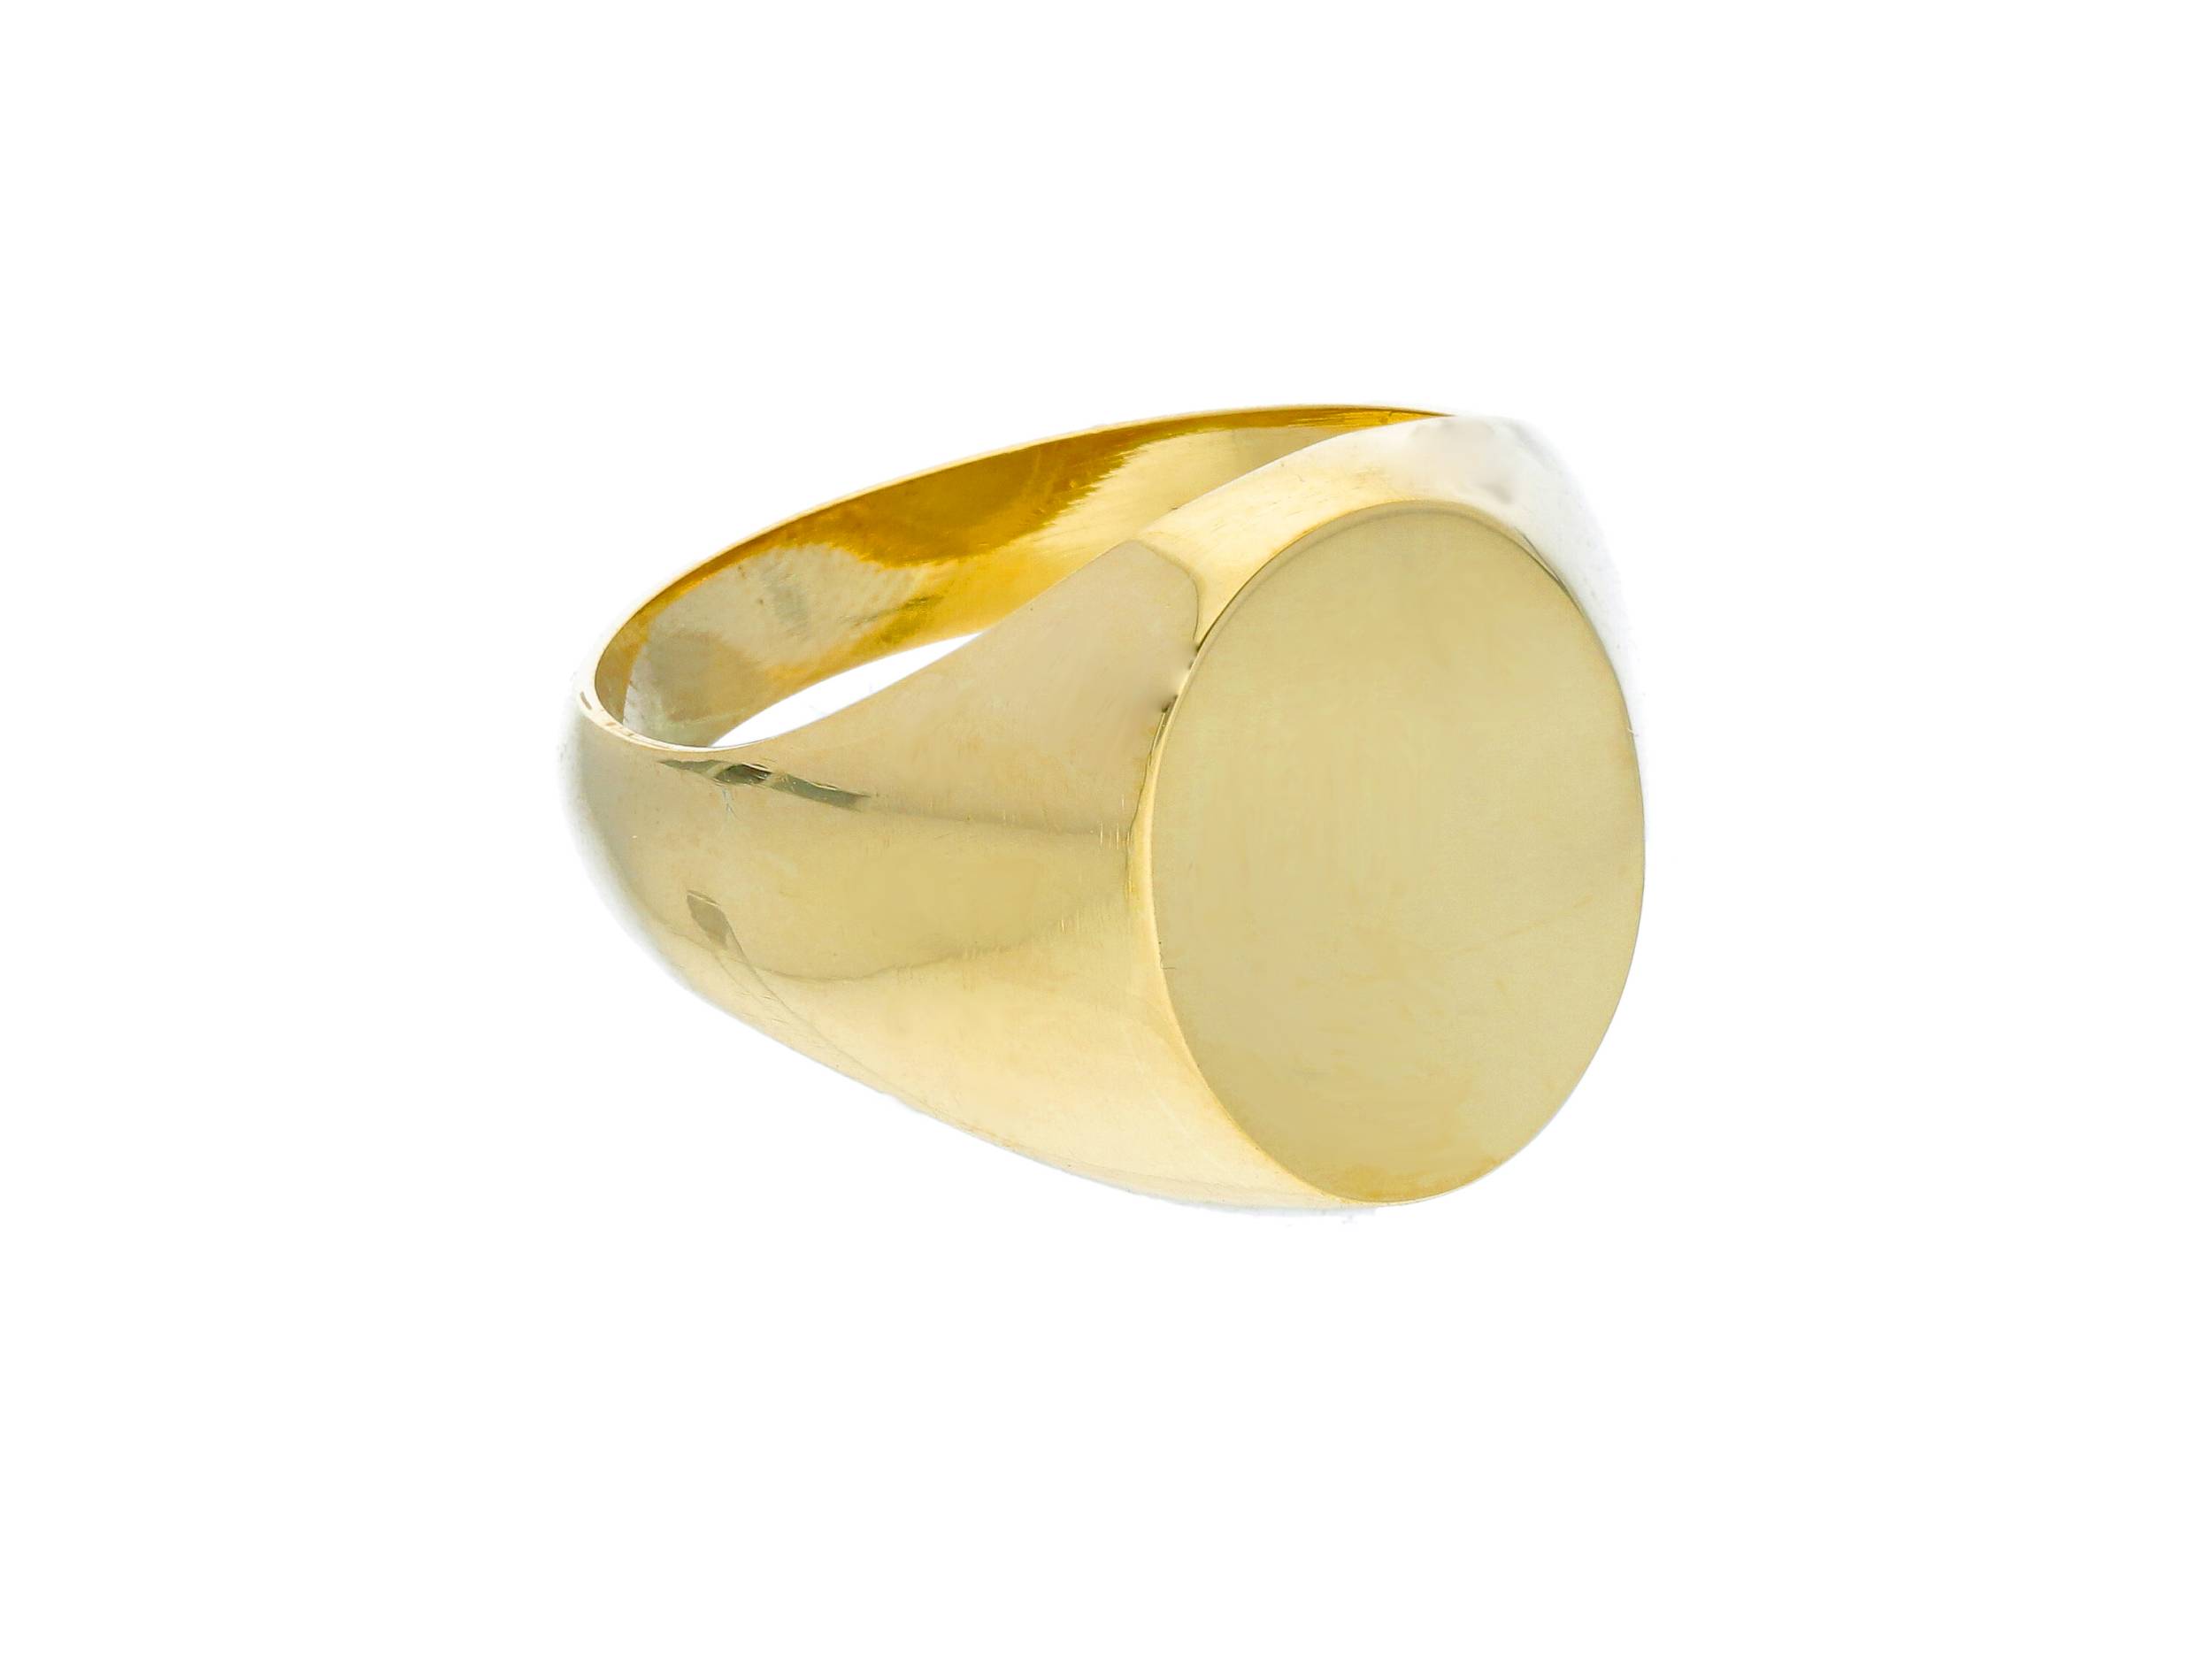 Stylish and bold 18ct Yellow gold ring